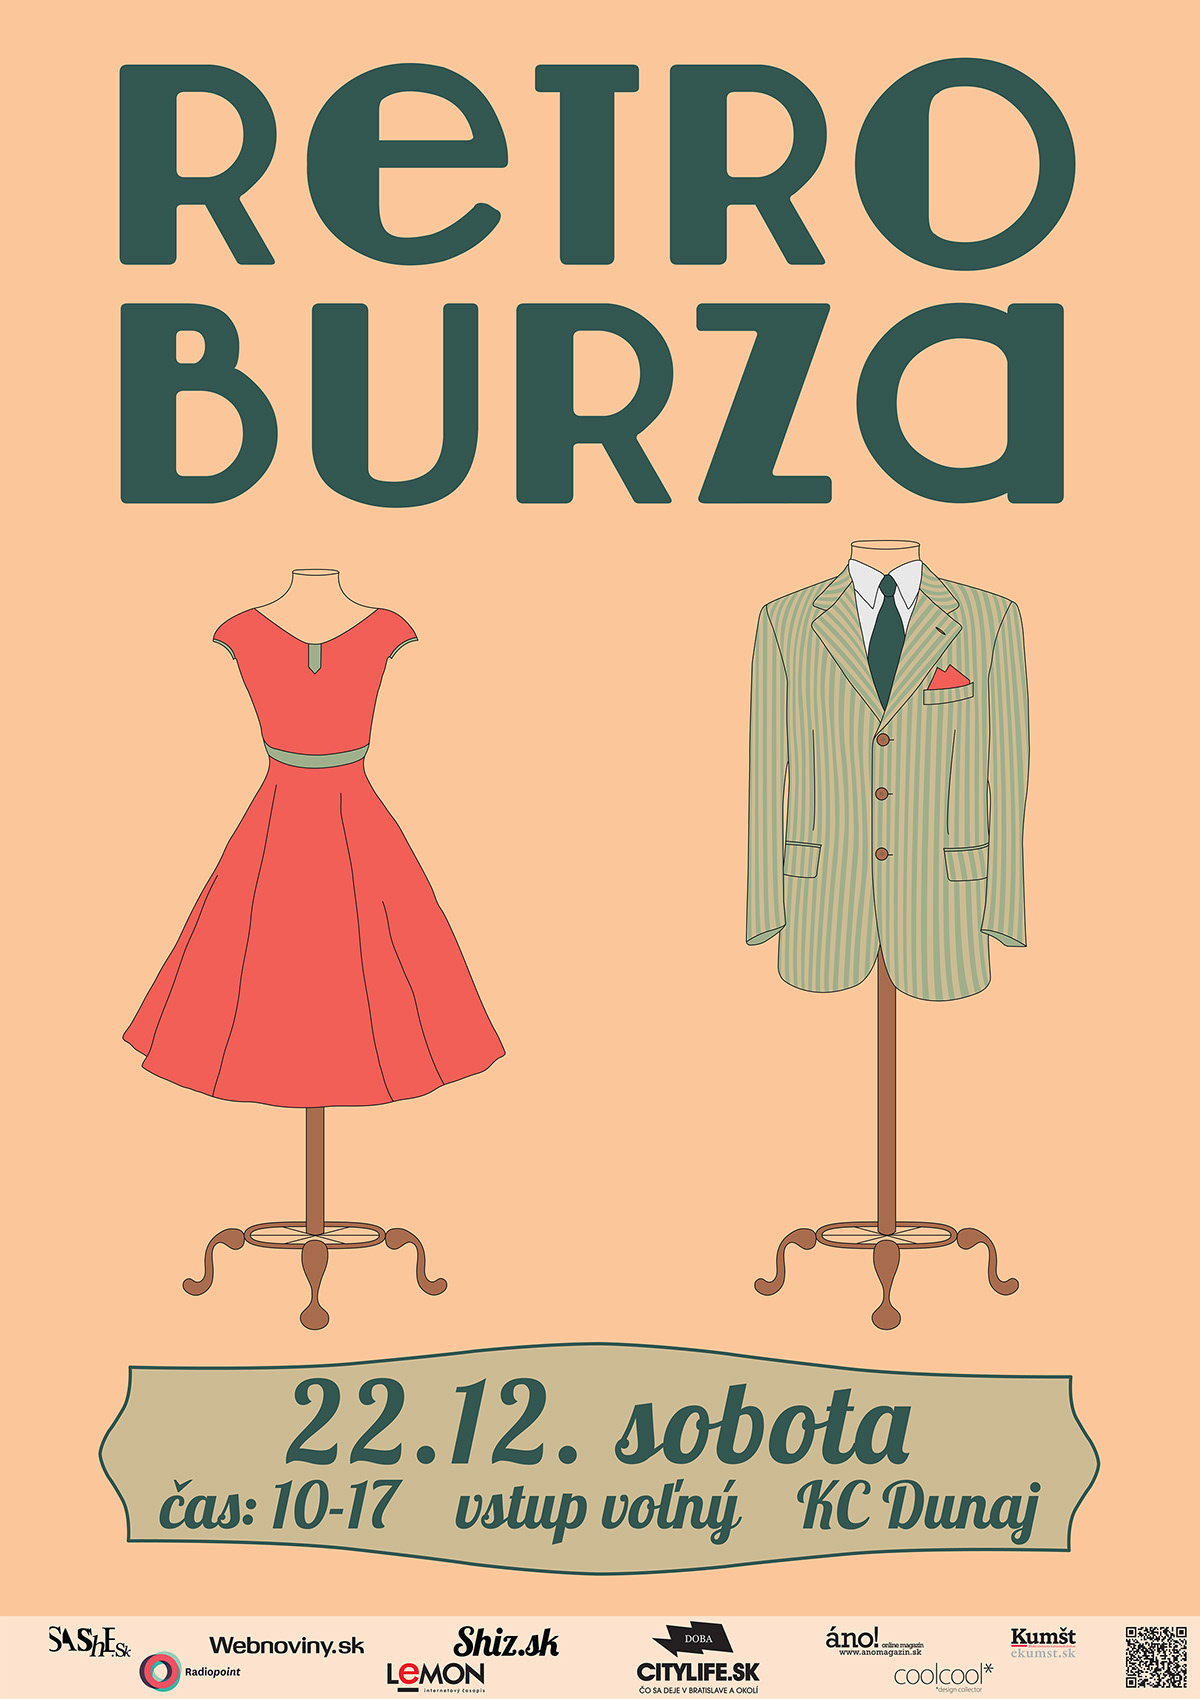 Retro burza  market poster